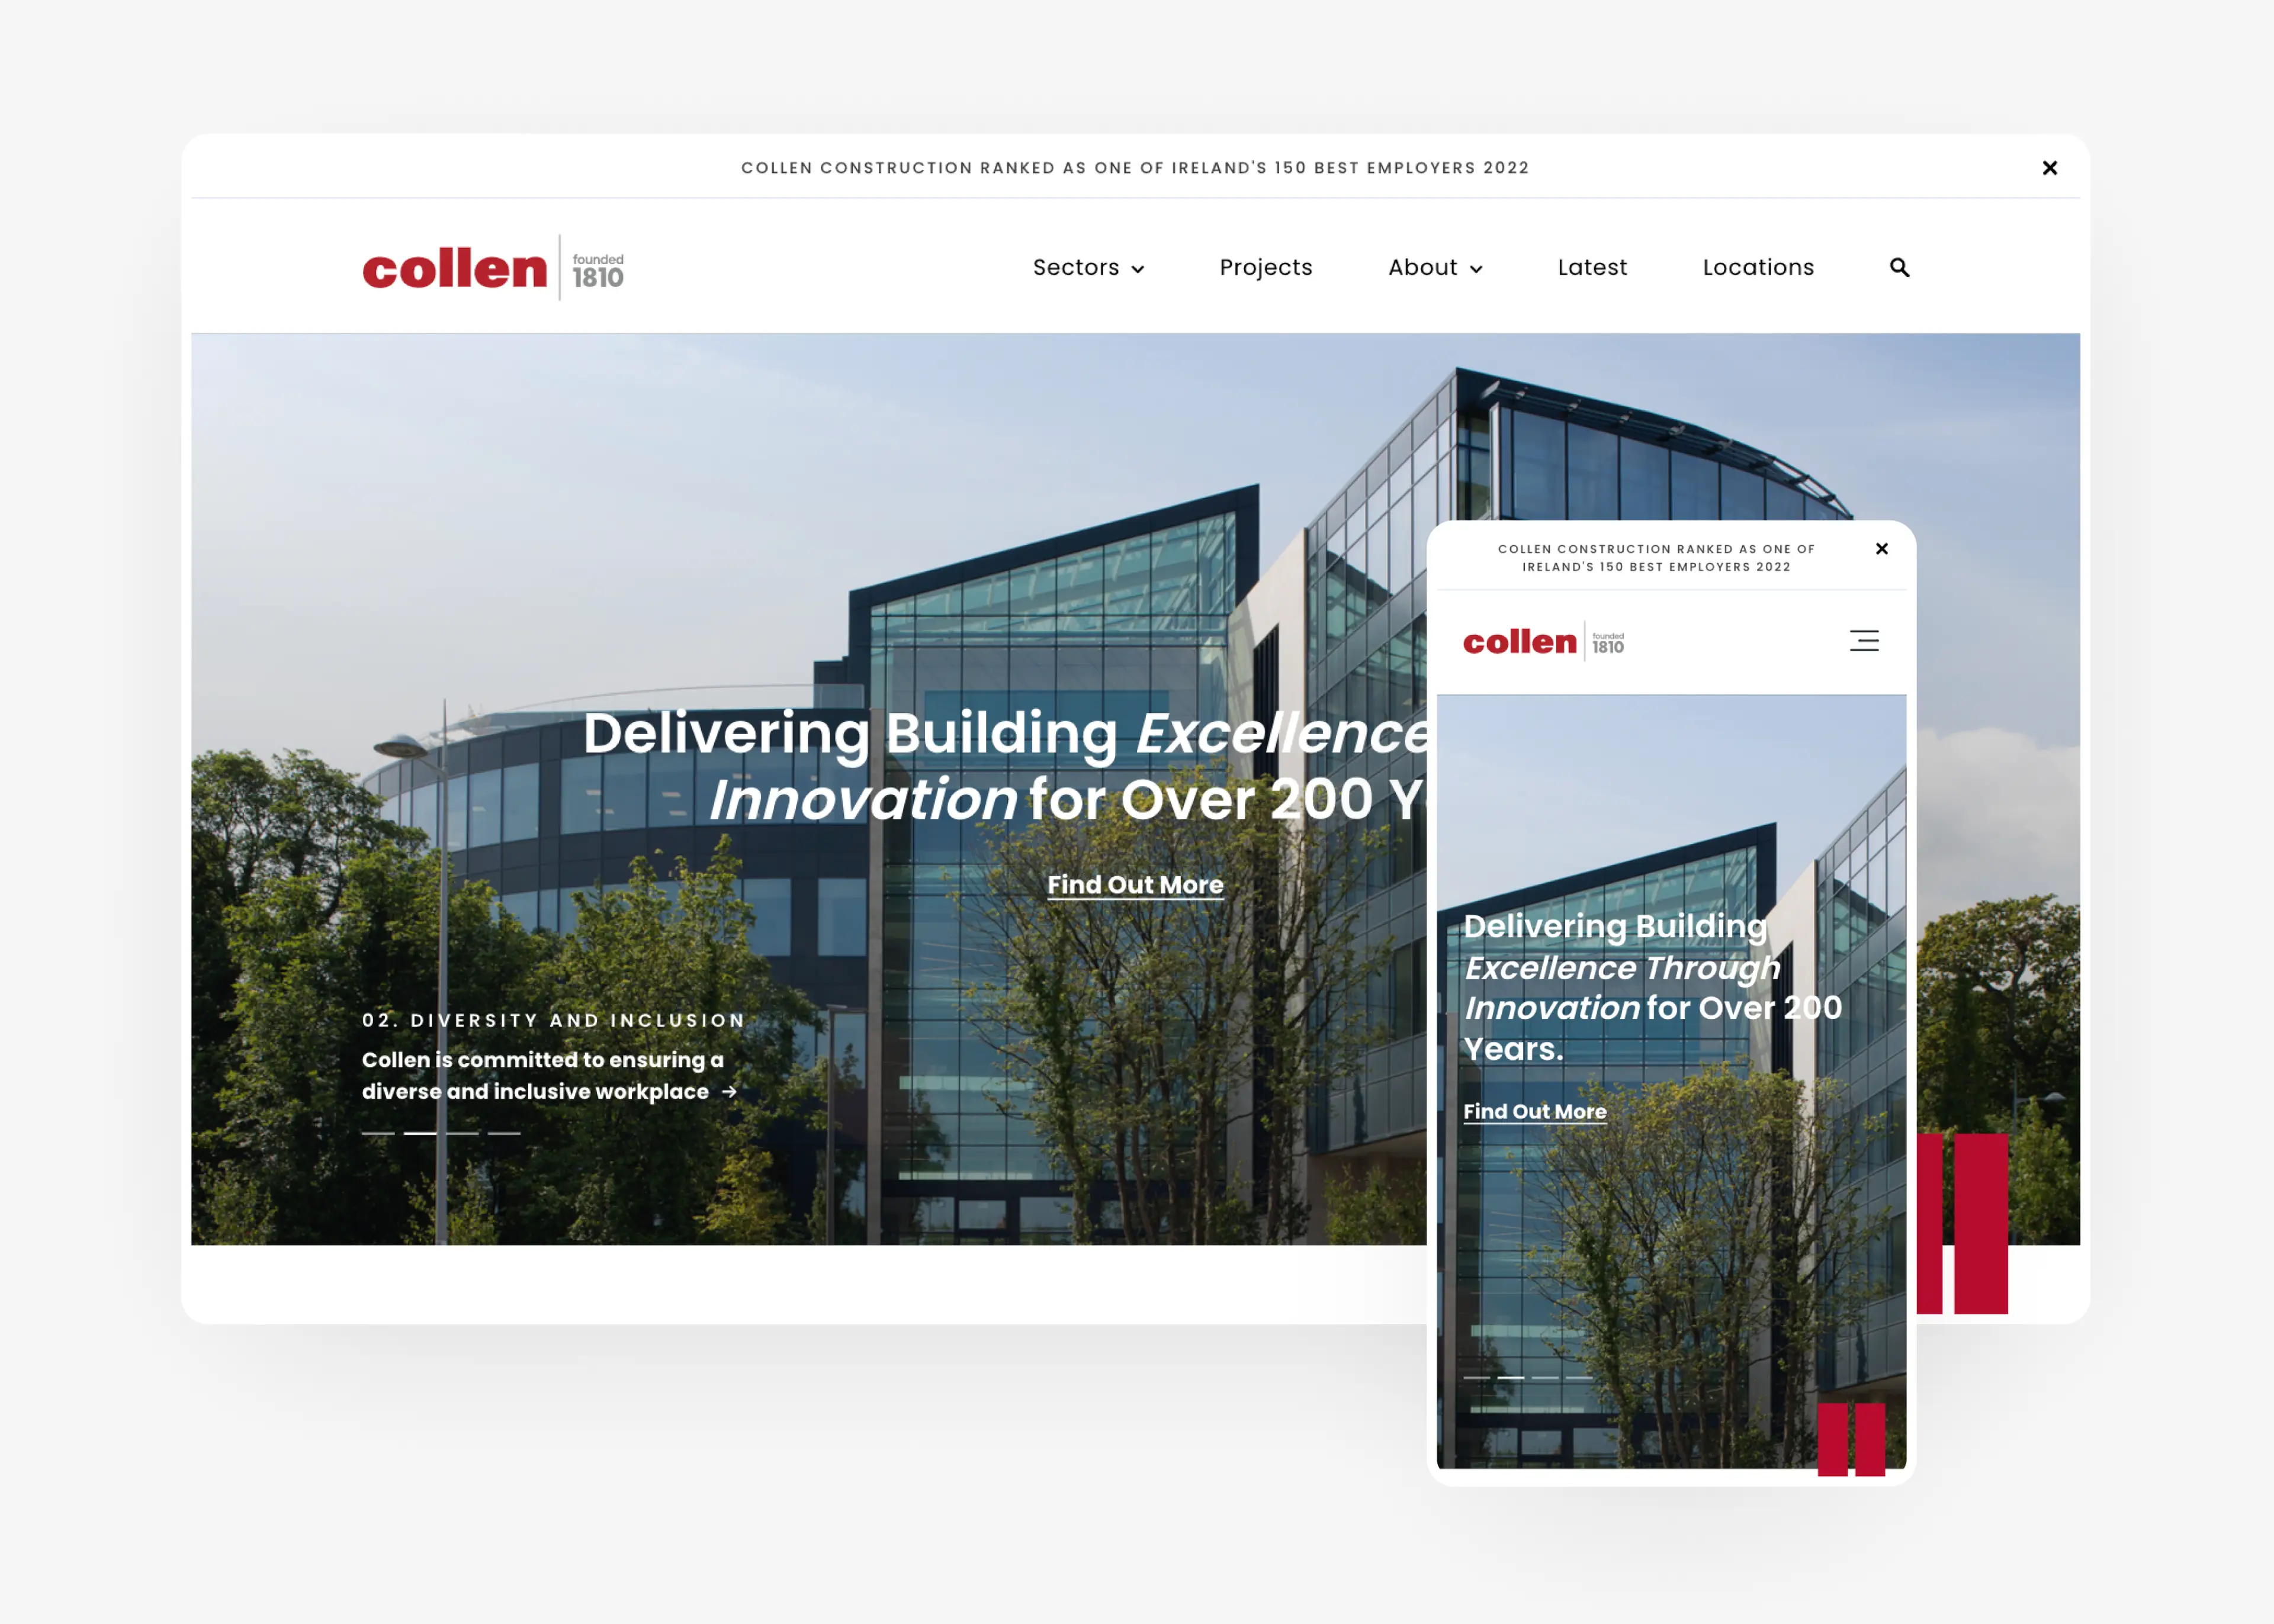 Collon desktop and mobile homepage